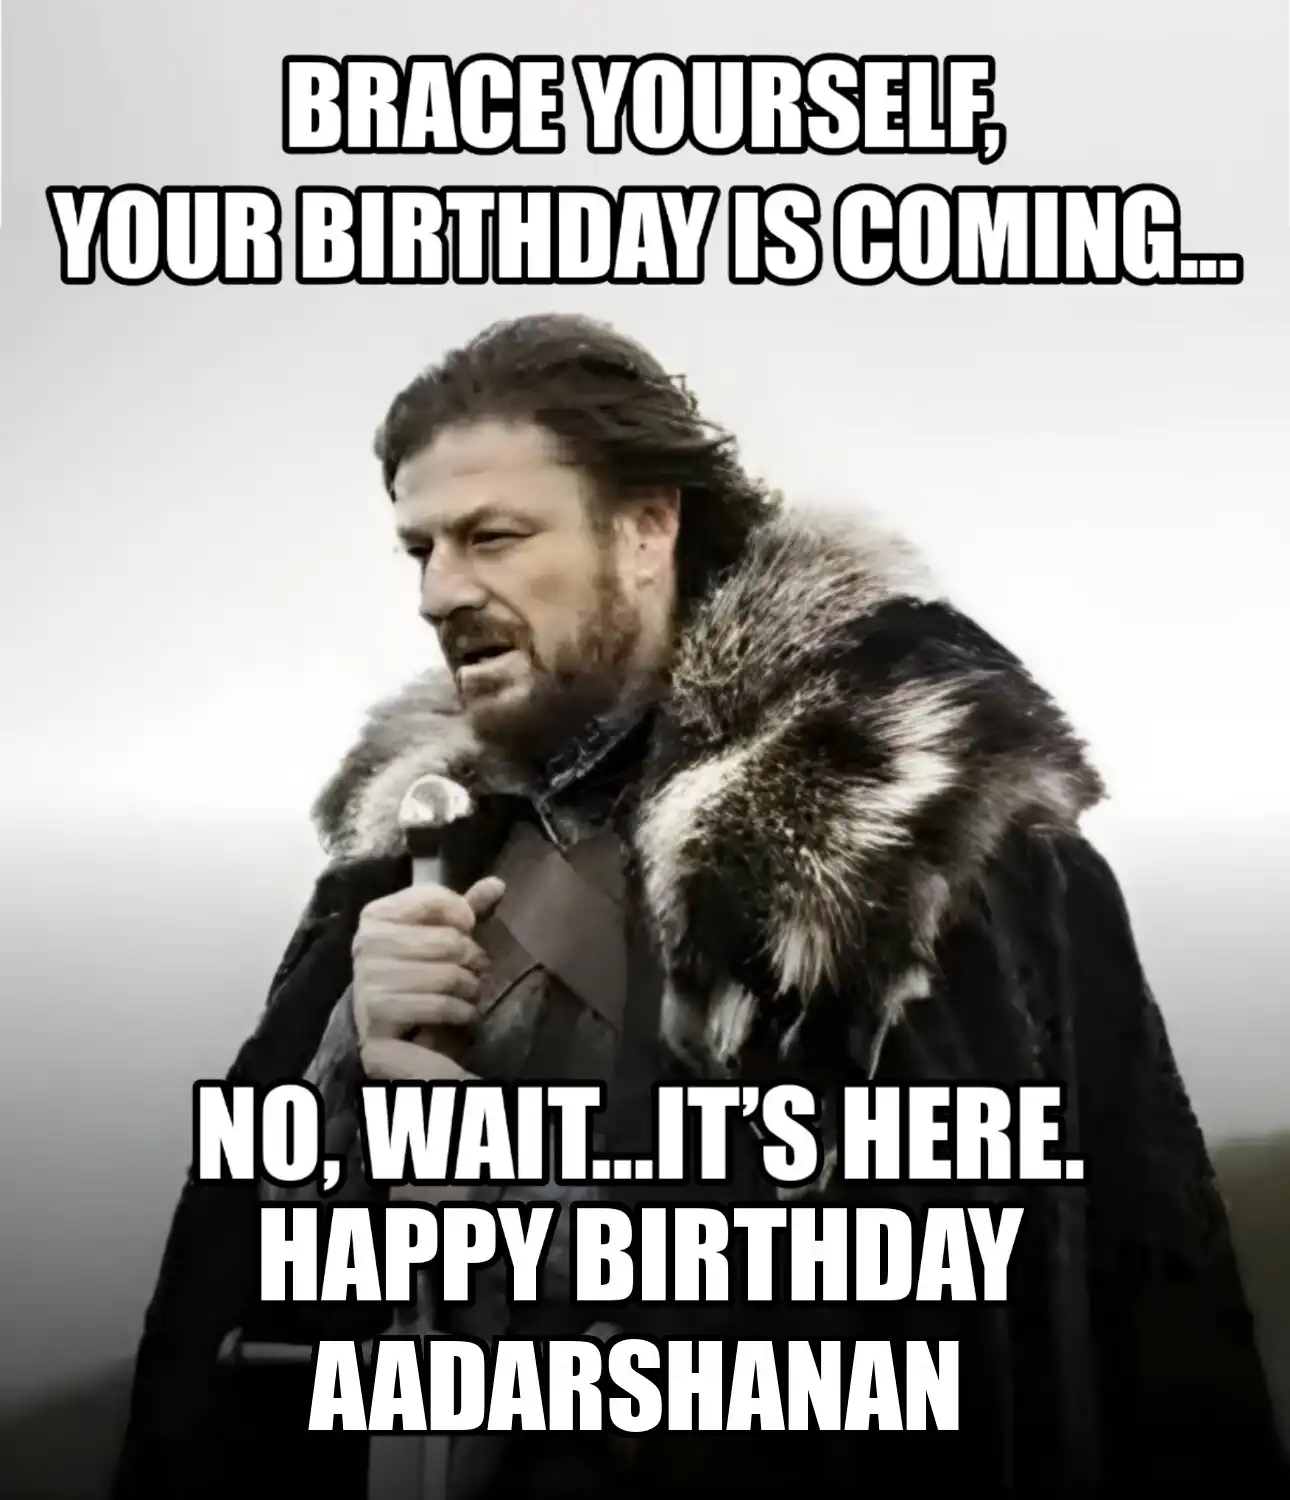 Happy Birthday Aadarshanan Brace Yourself Your Birthday Is Coming Meme